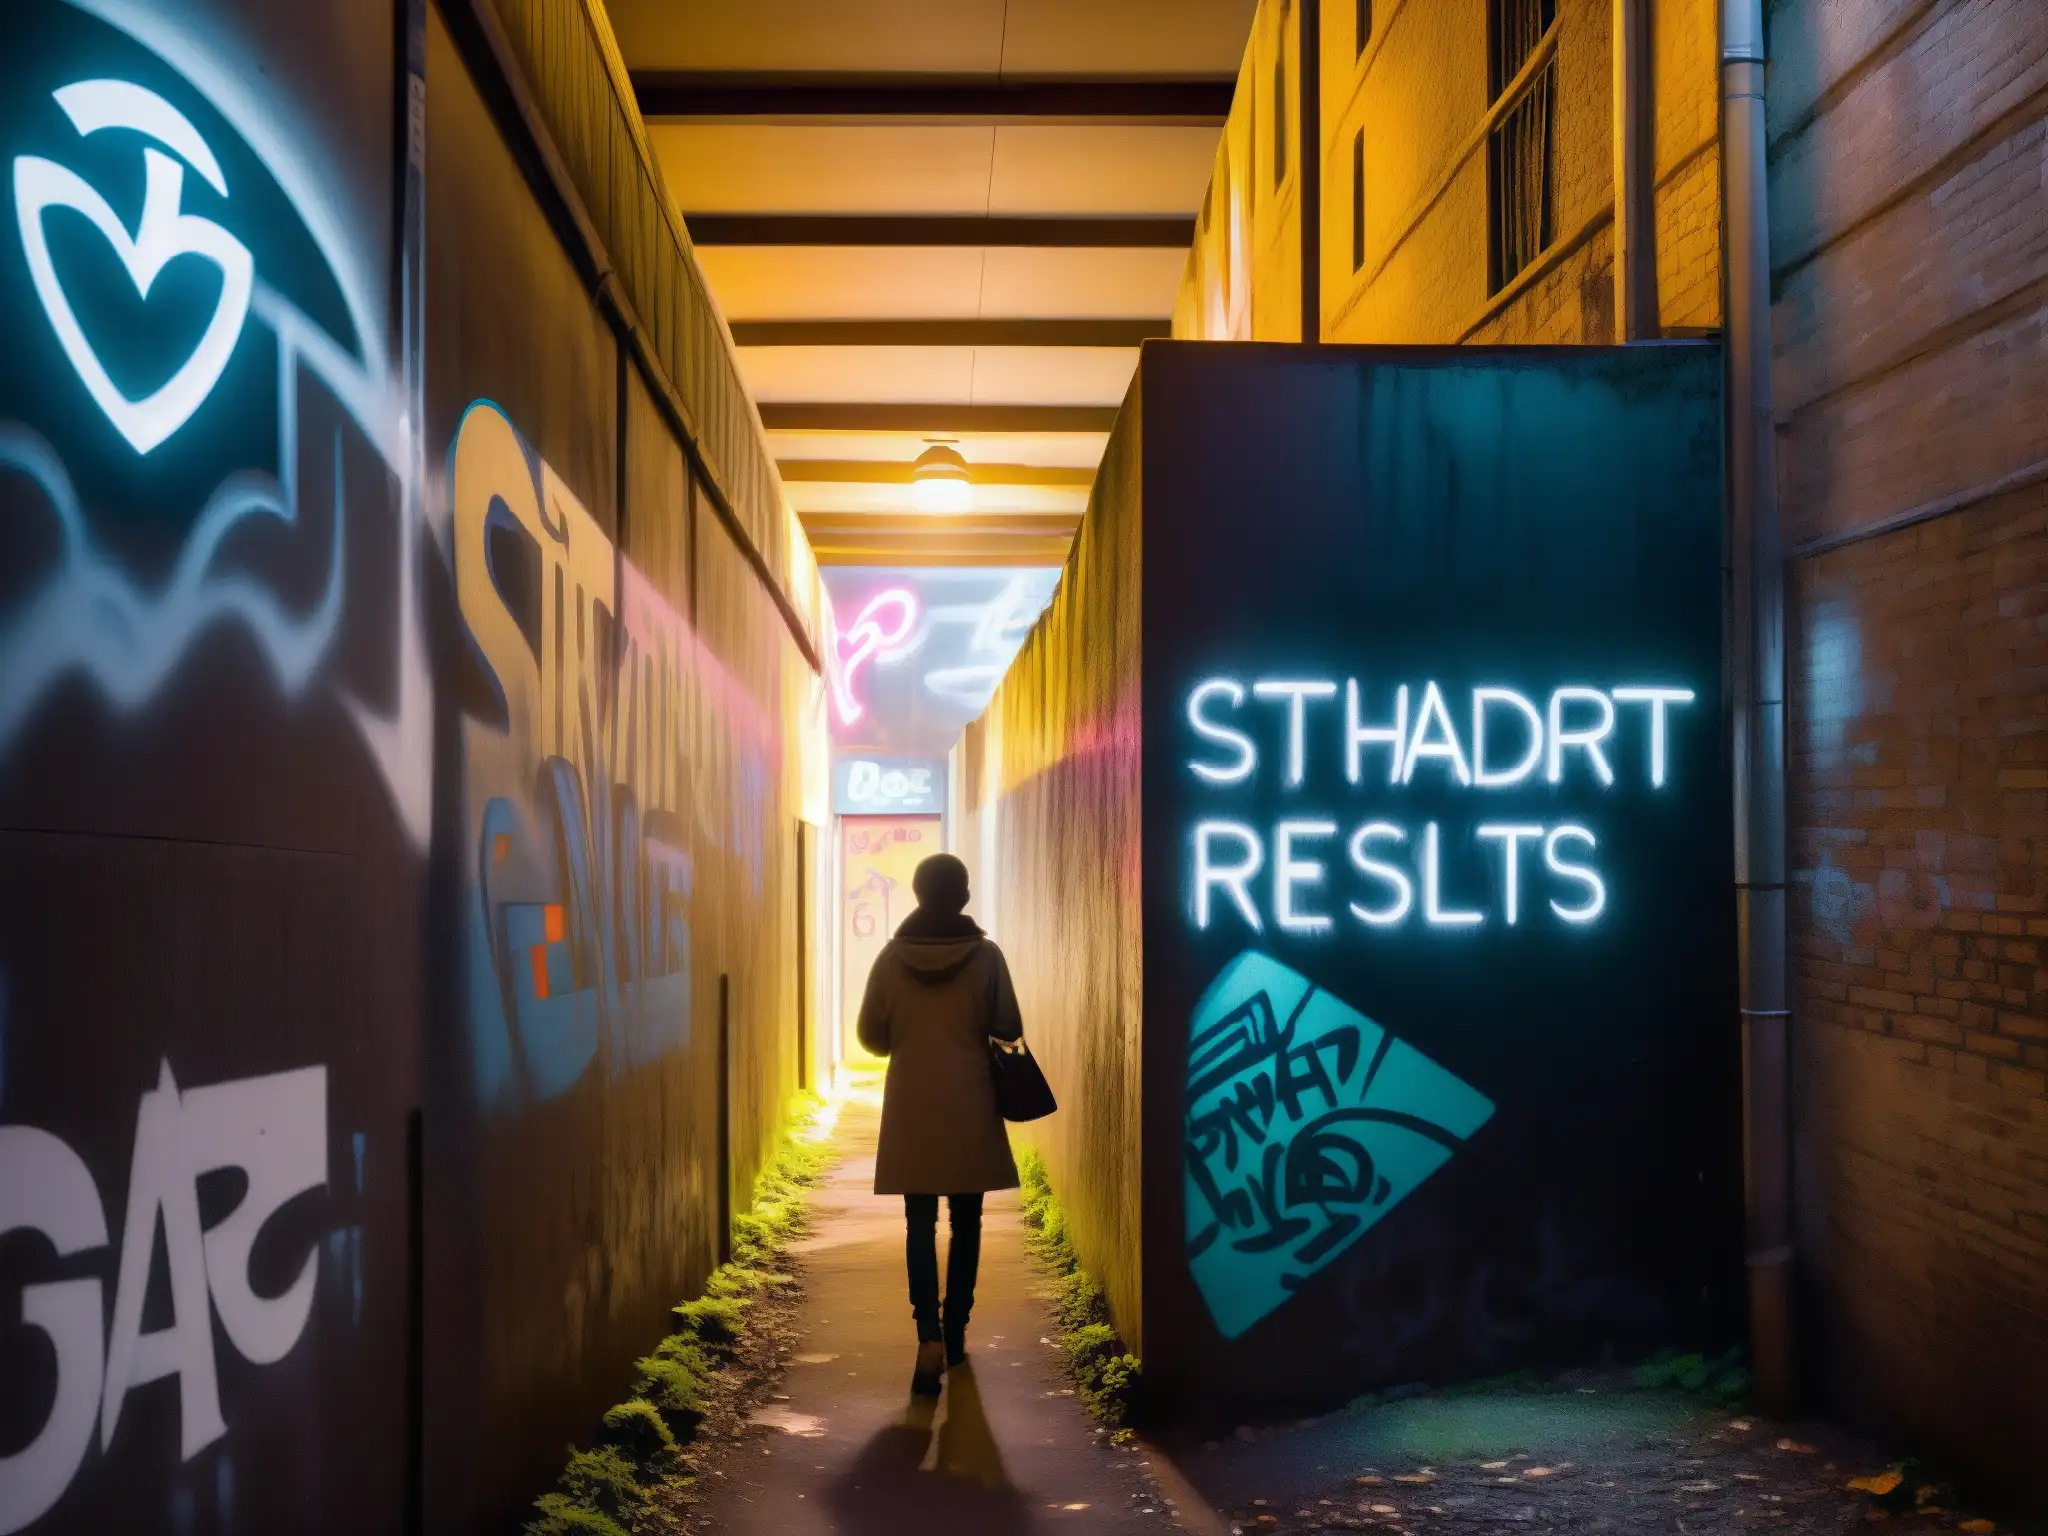 Alleyway con grafitis iluminado por smartphone, figura misteriosa